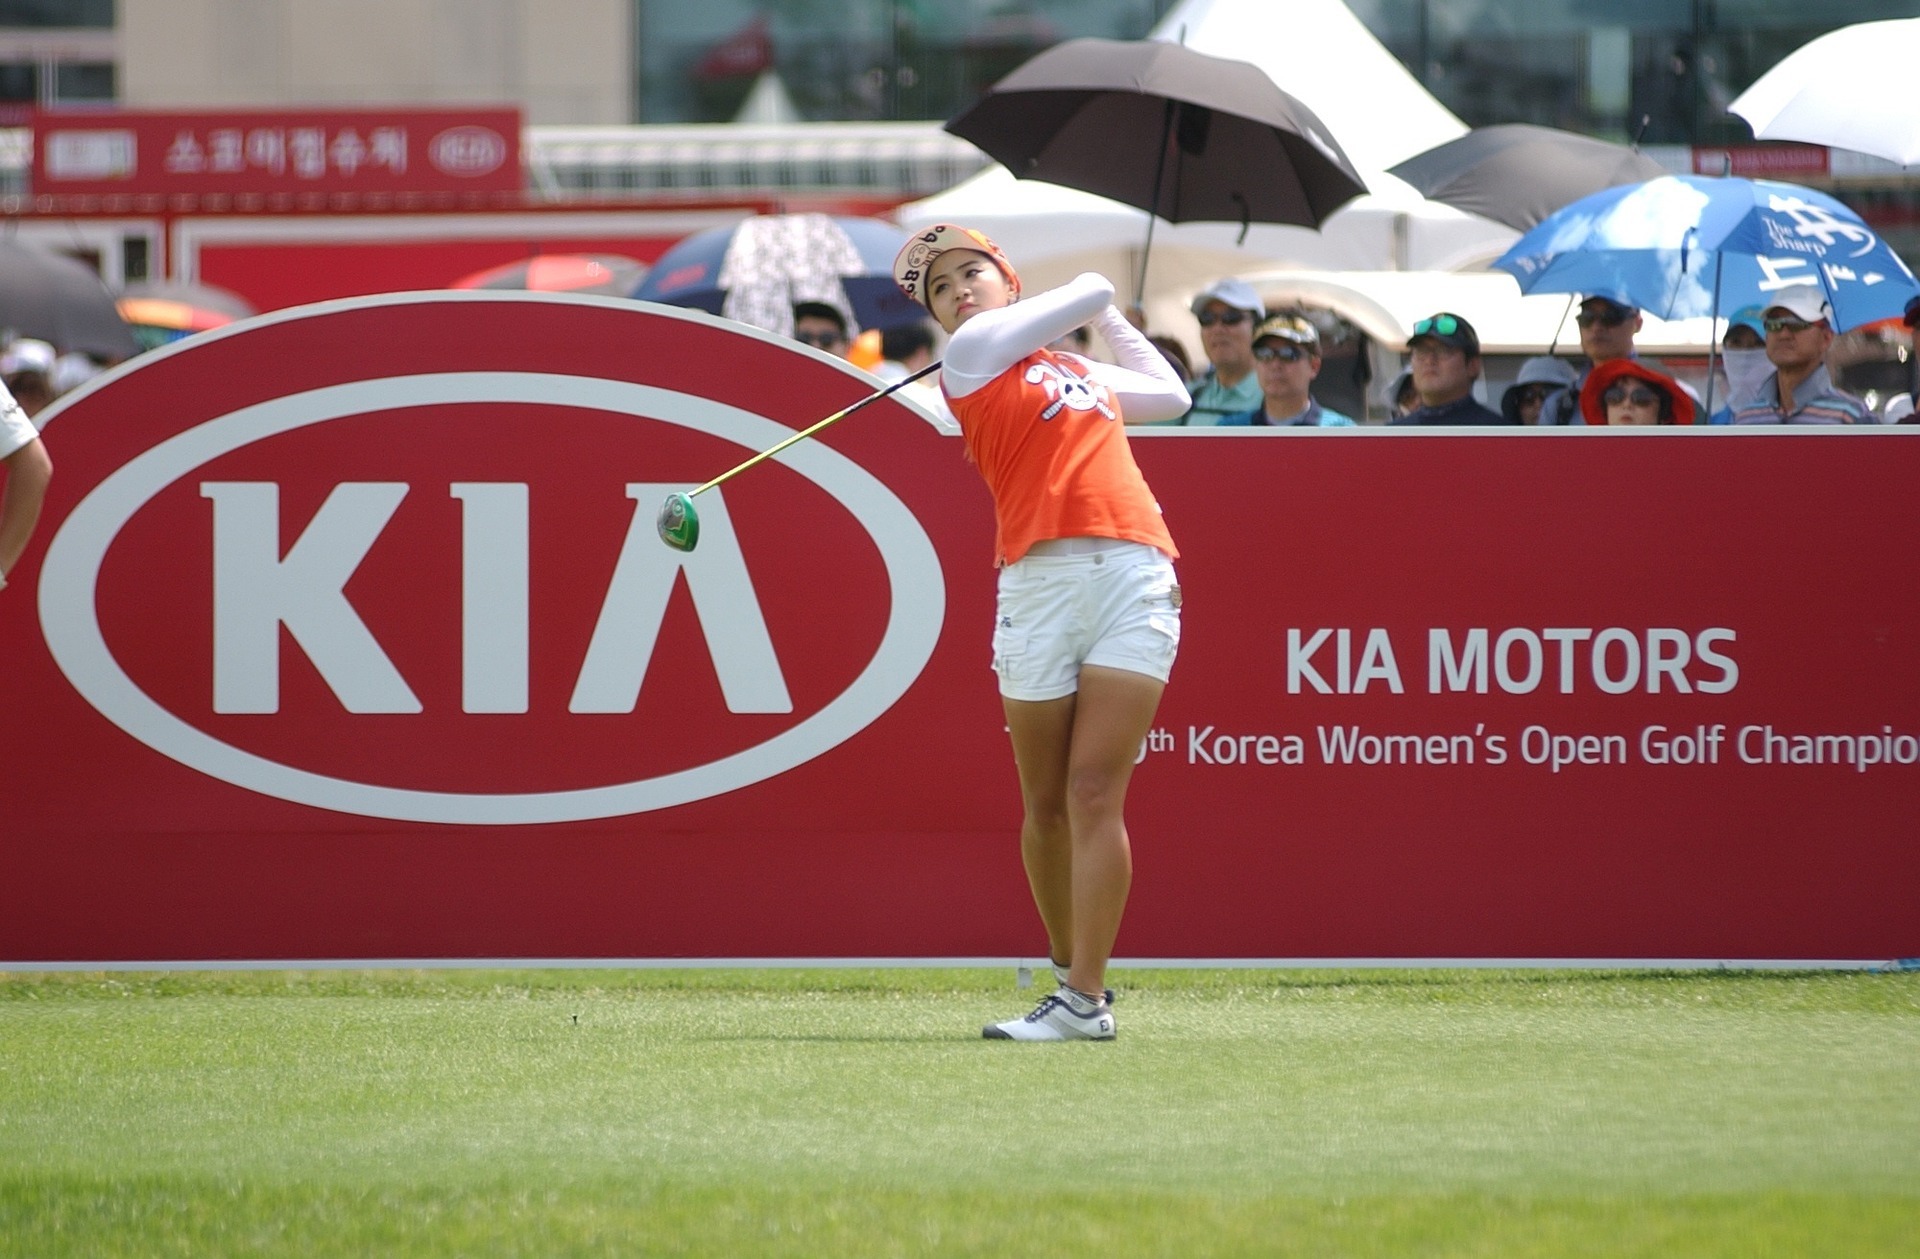 a South Korean woman playing golf